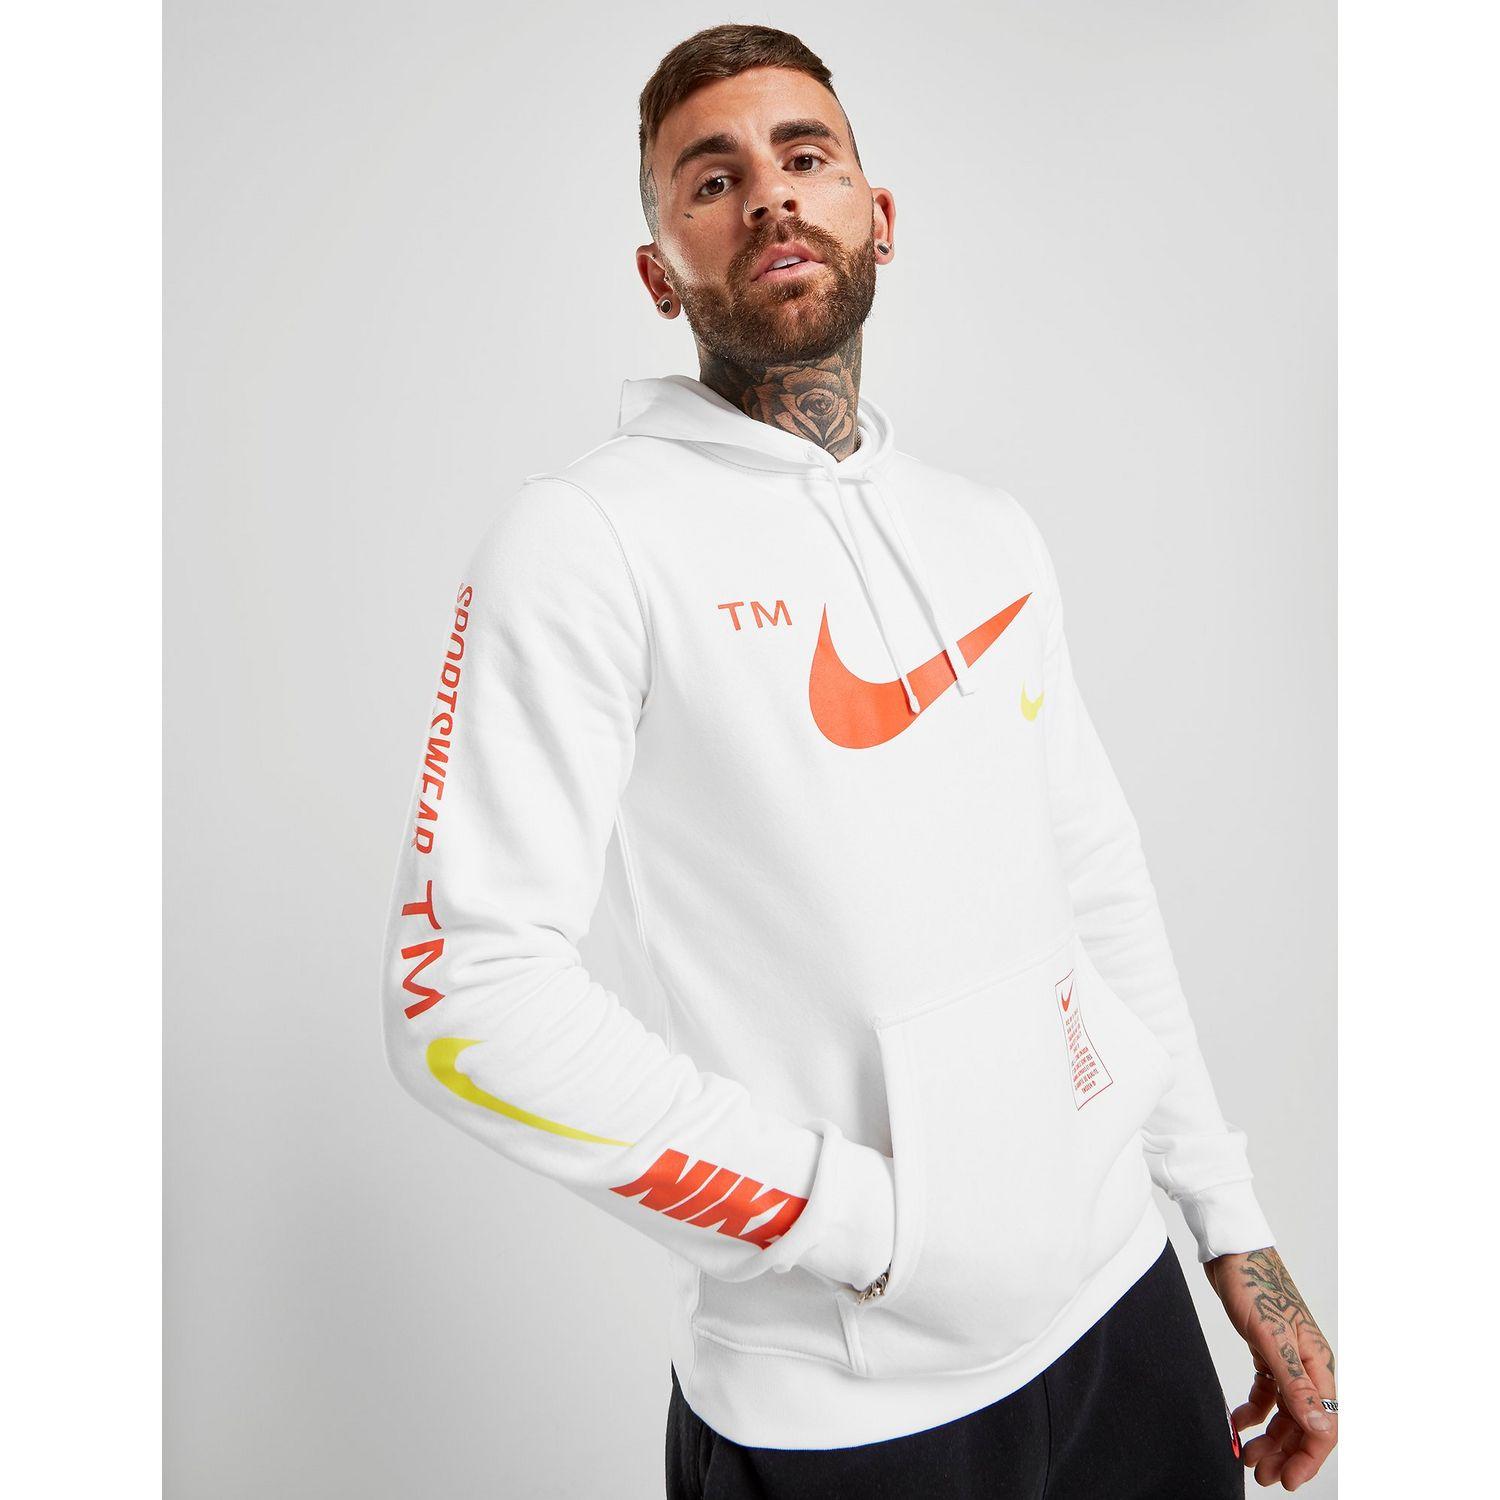 Nike Overbranded Sweatshirt Online Deals, UP TO 62% OFF |  www.realliganaval.com